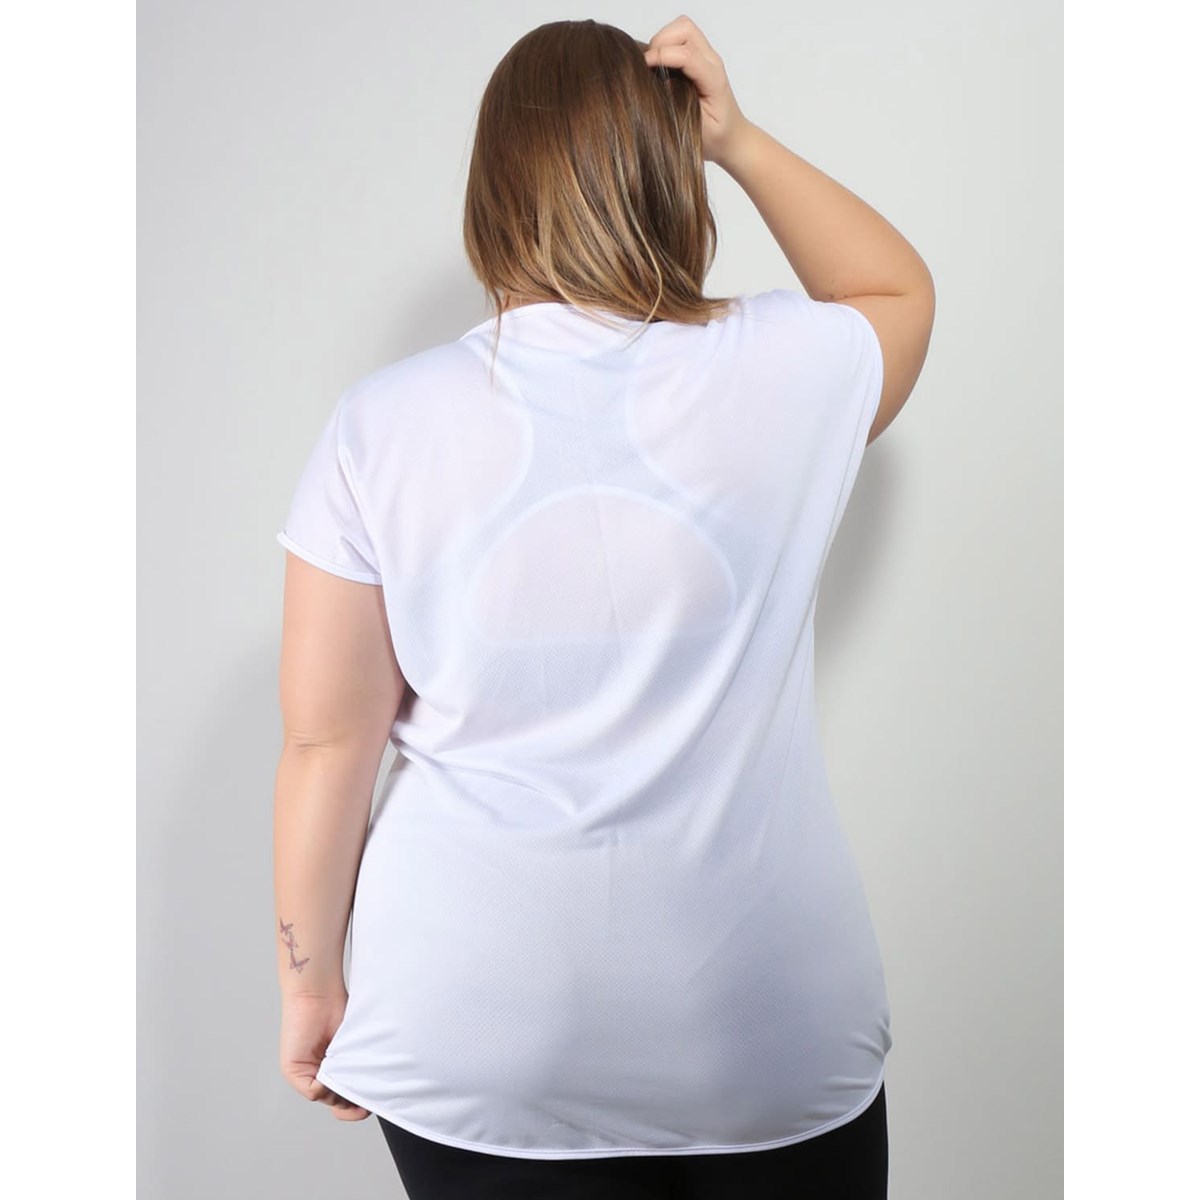 Blusa Feminina Plus Size Fitness Branca com Estampa em Dry Fit | Ref: 4.4.1752DRESS-02